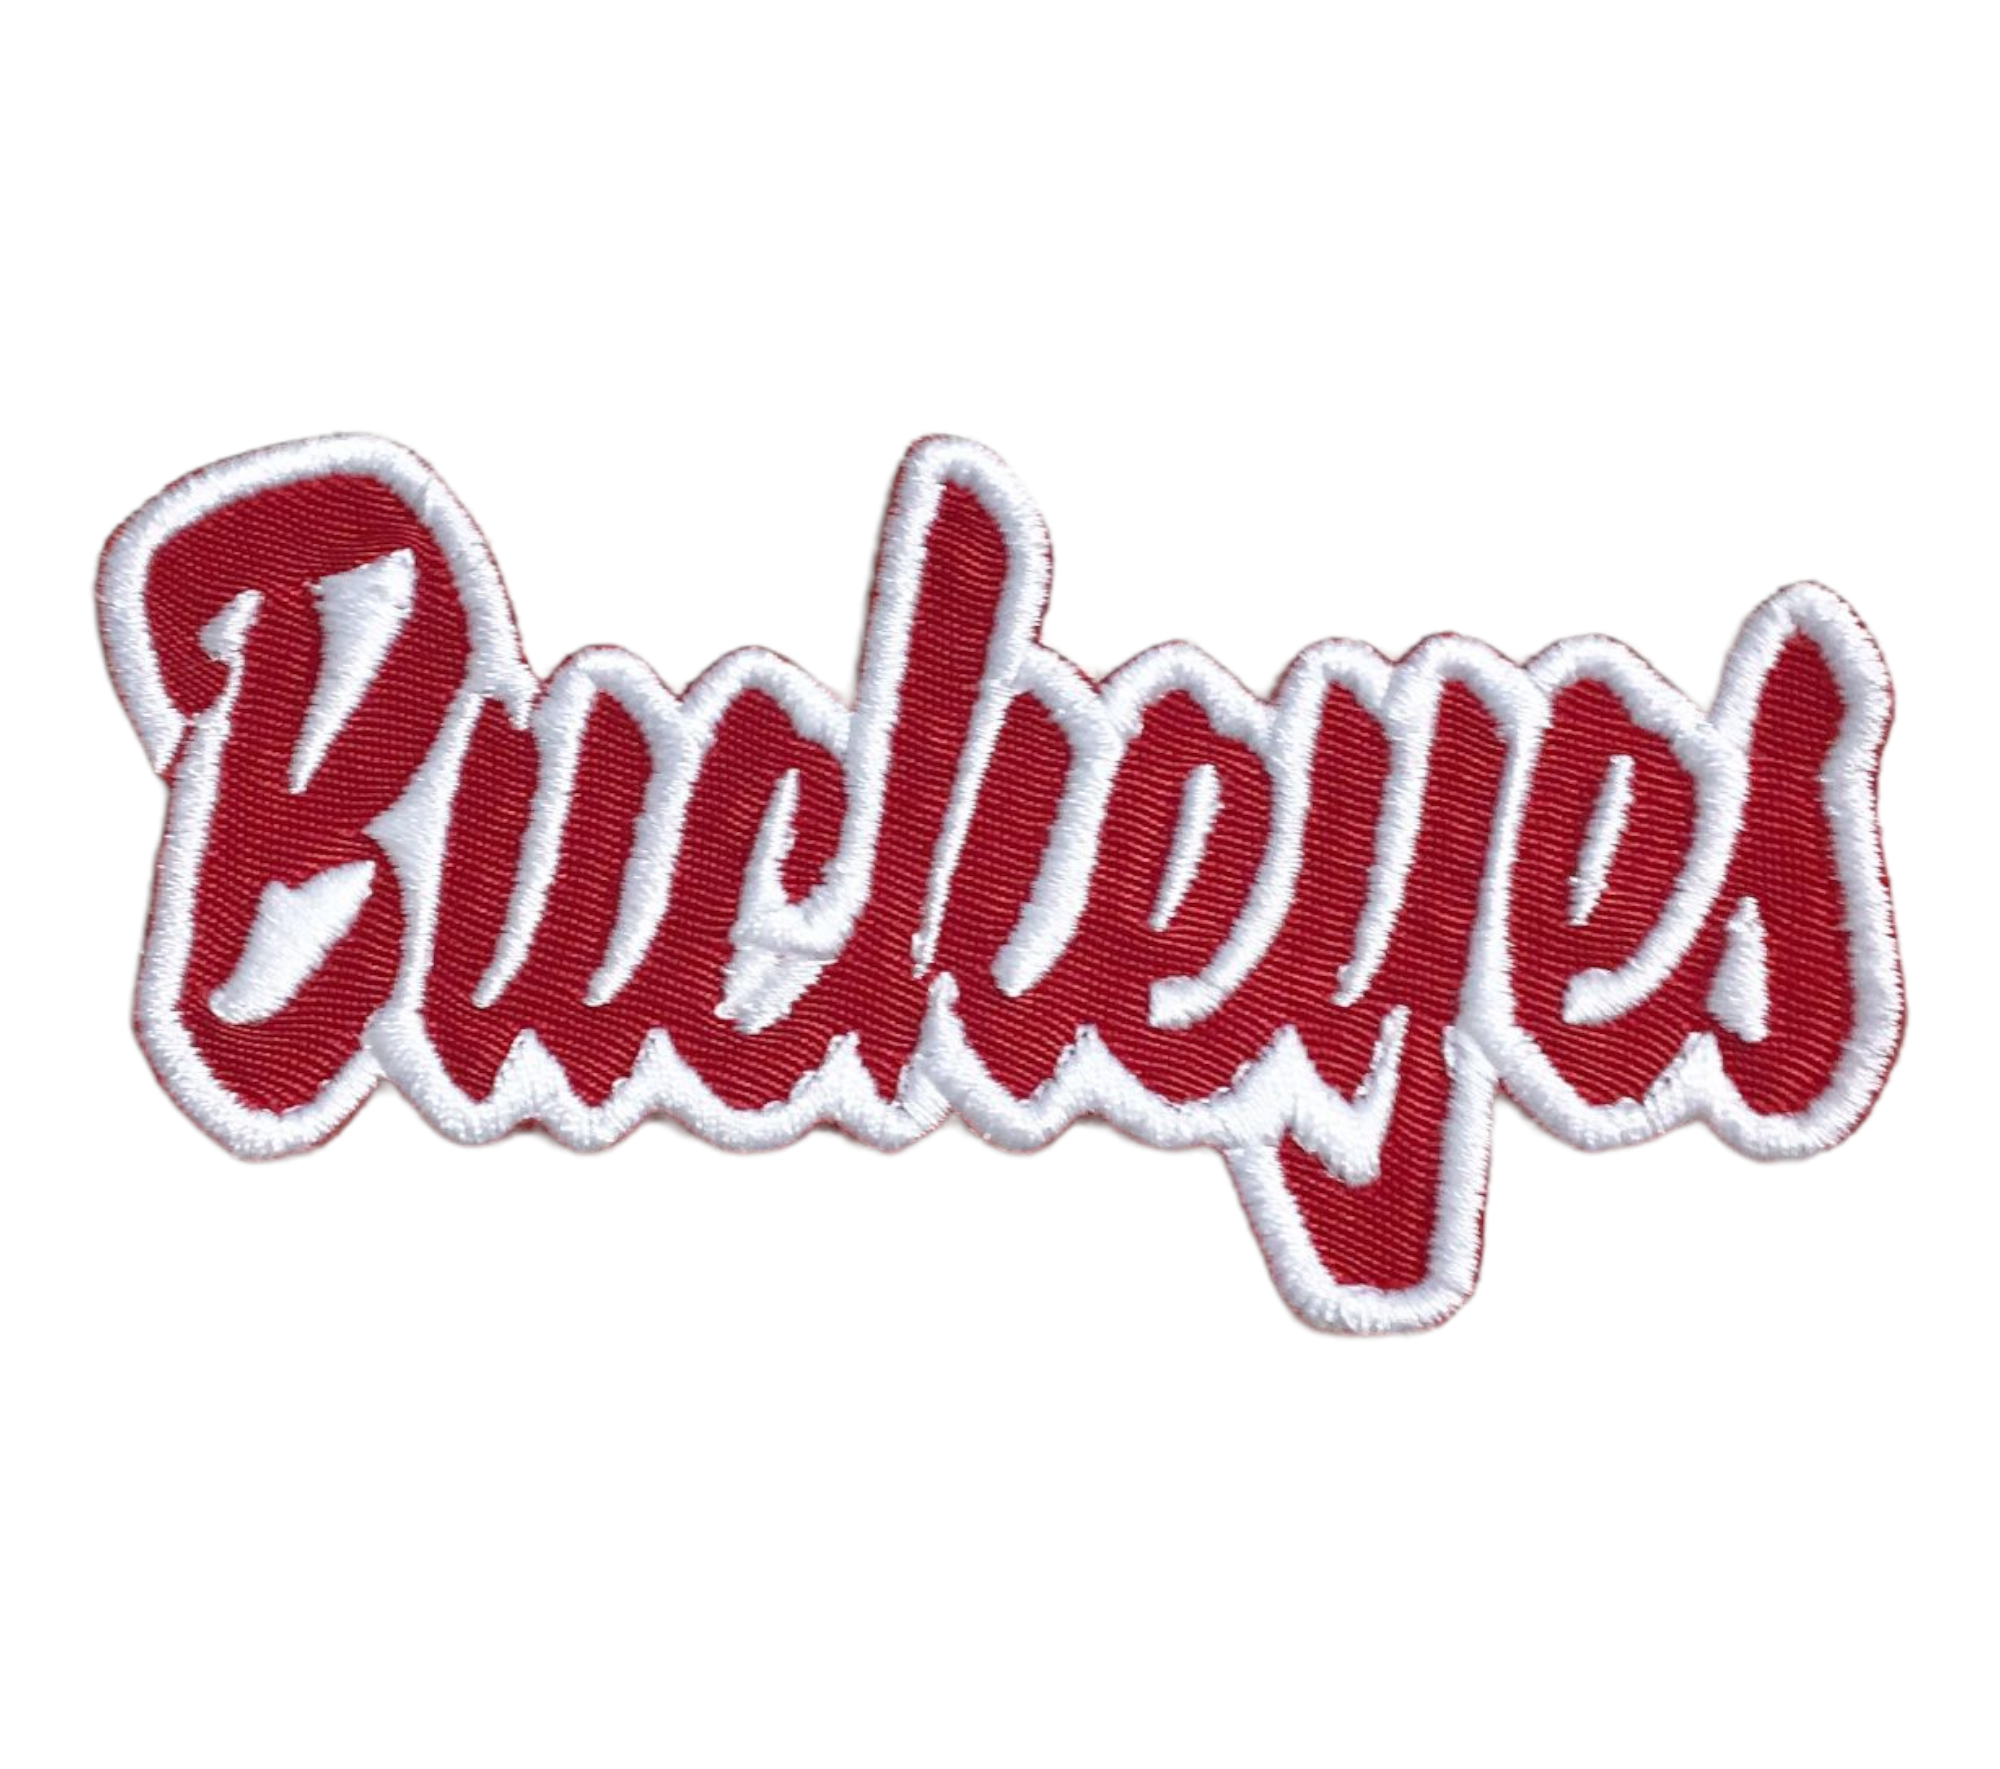 Buckeyes - 2x4 - Red/White